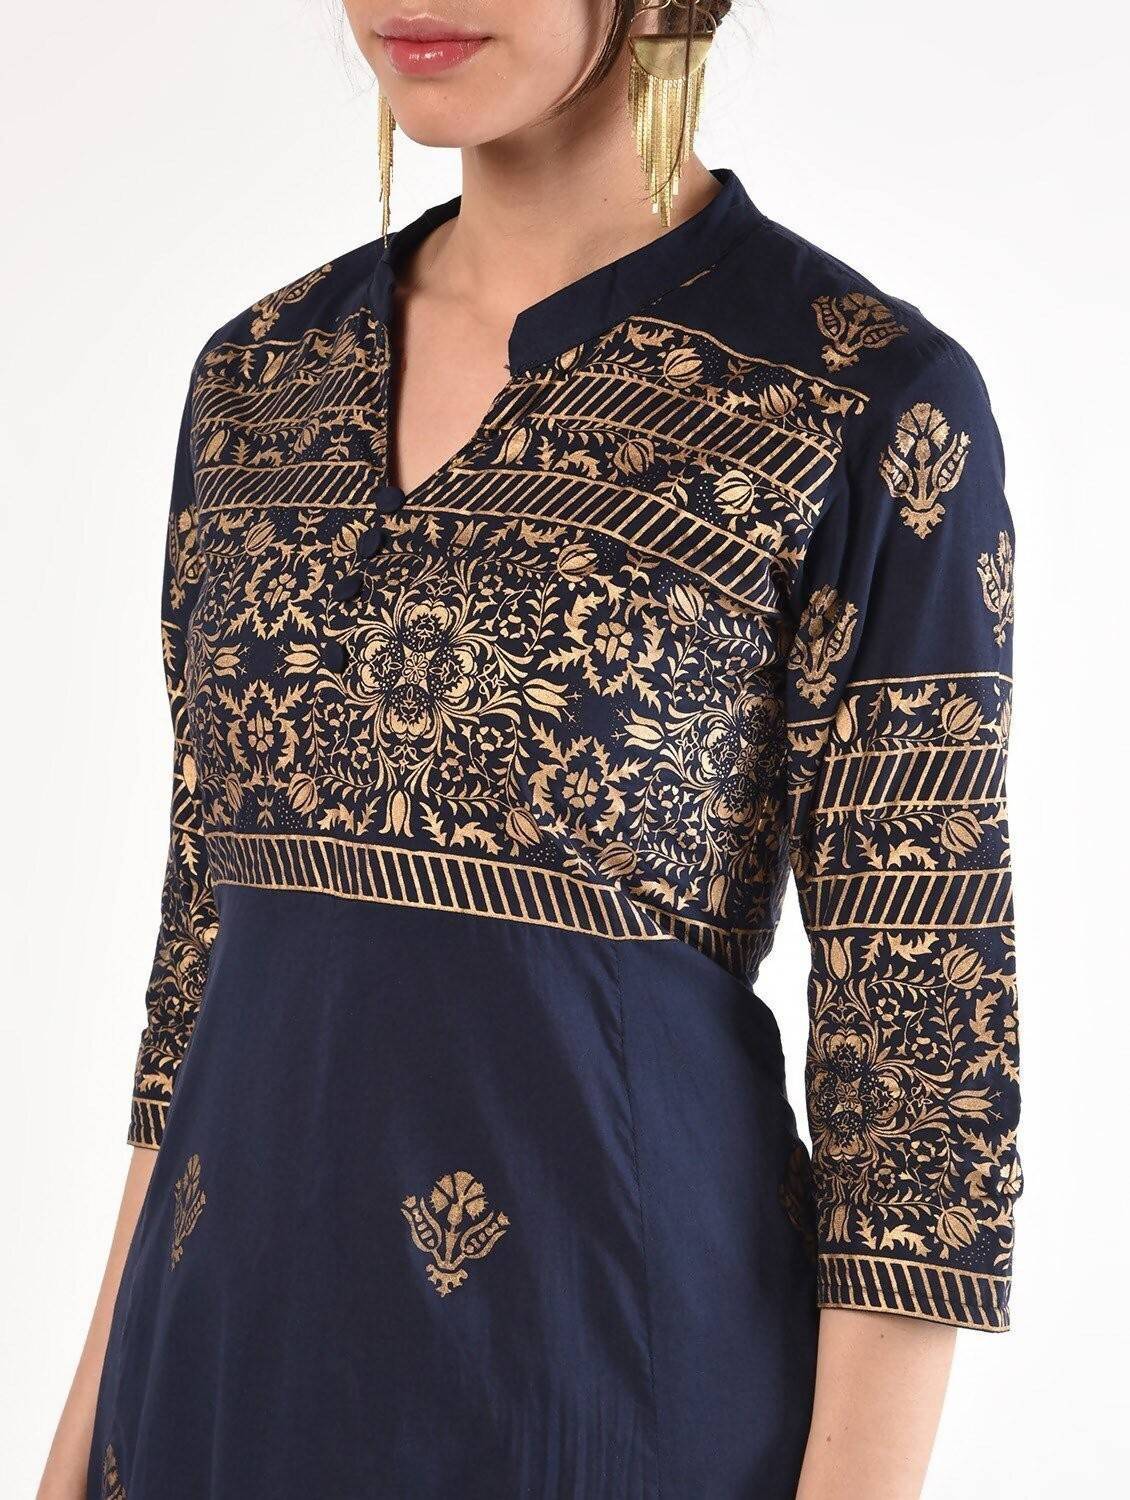 Women's Navy Blue & Golden Cambric Cotton Hand Block Print Anarkali Kurta With Silk Golden Skirt - Cheera